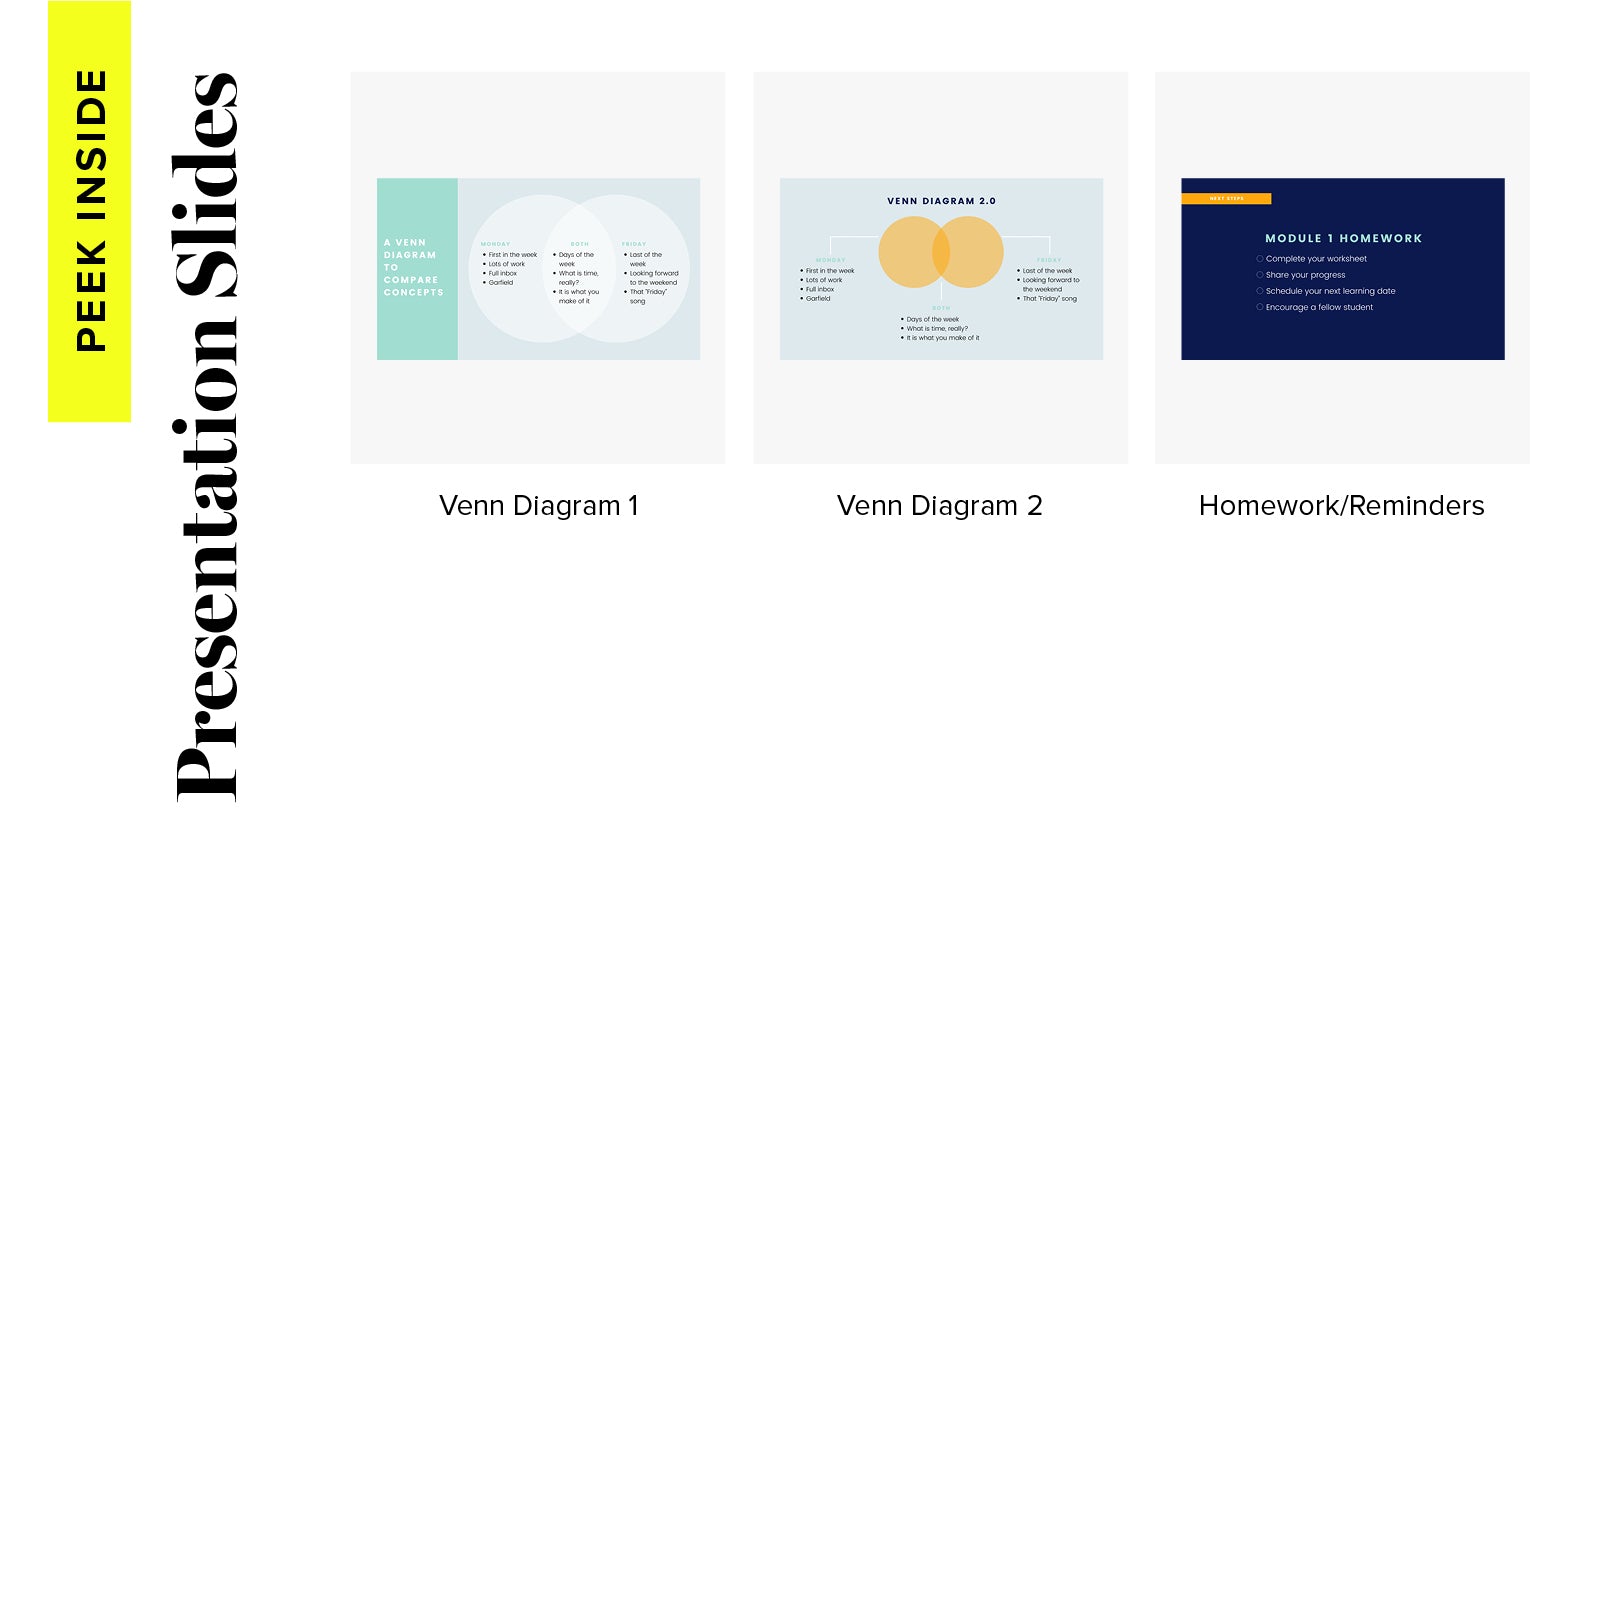 Course Design Kit Slides - Positively Simplified